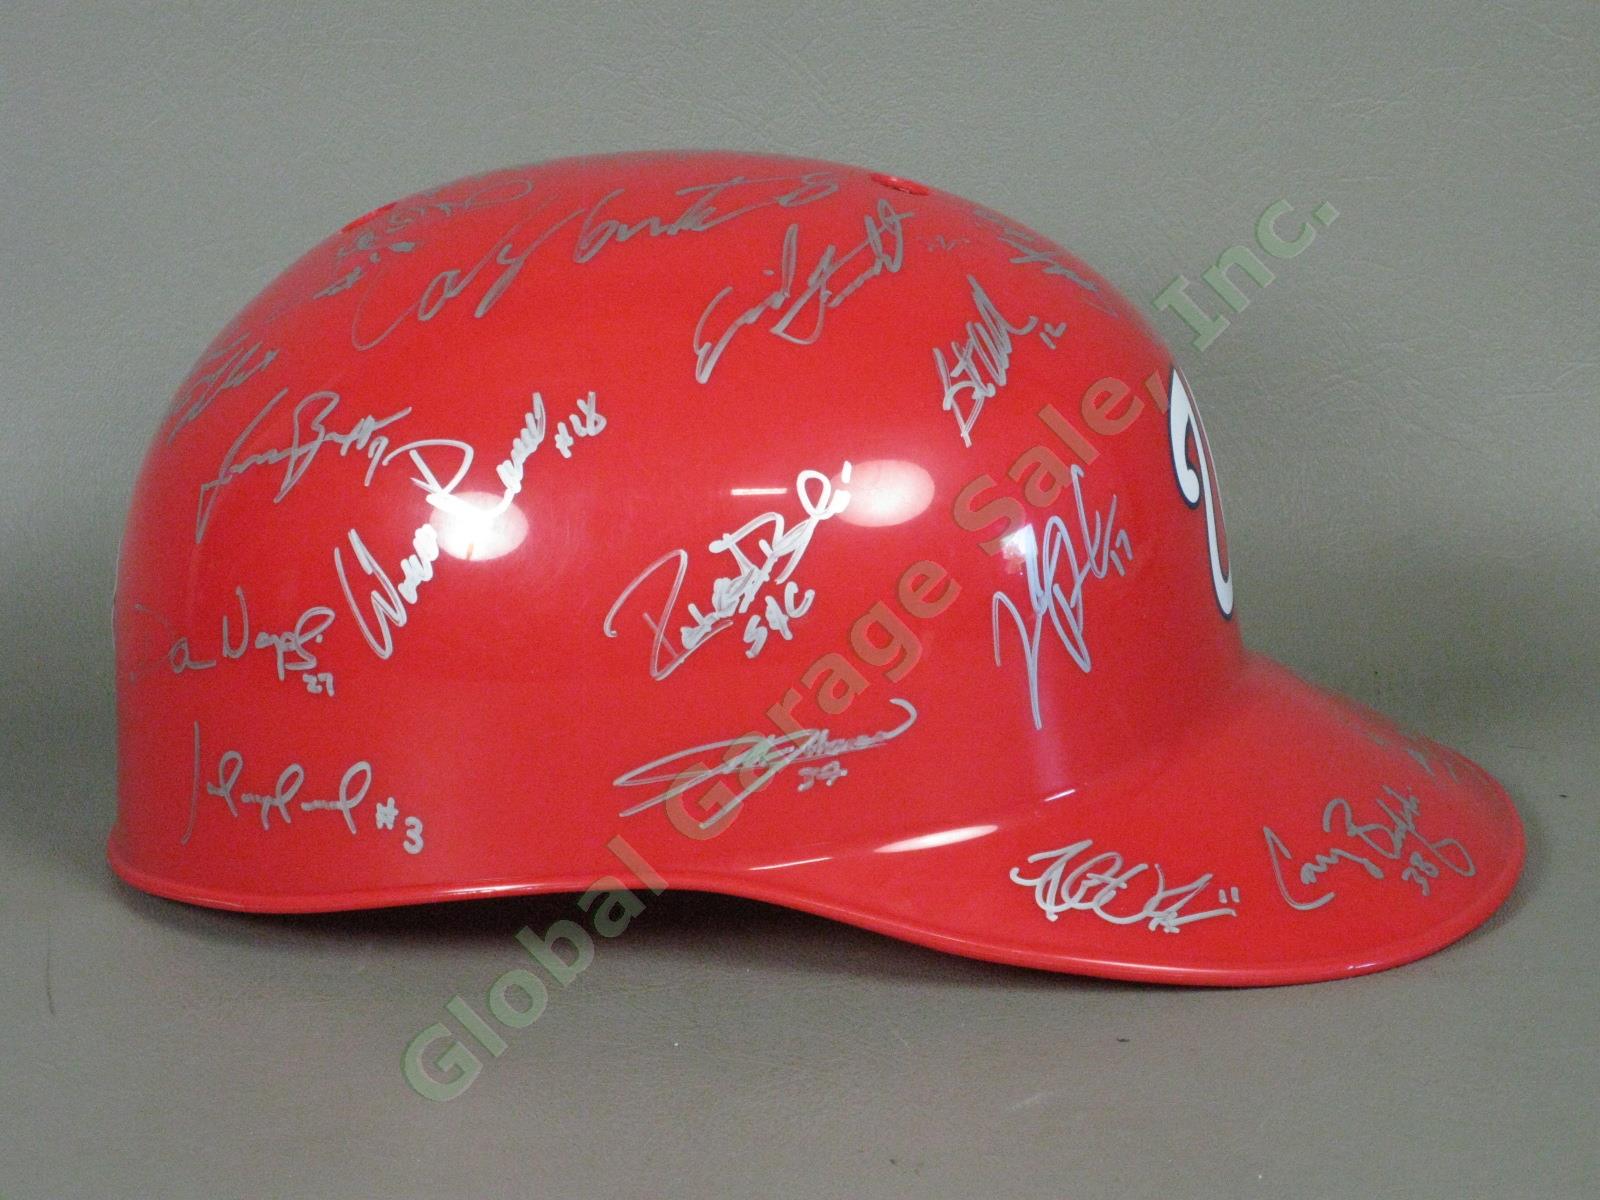 2013 Auburn Doubledays Team Signed Baseball Helmet NYPL Washington Nationals NR 1